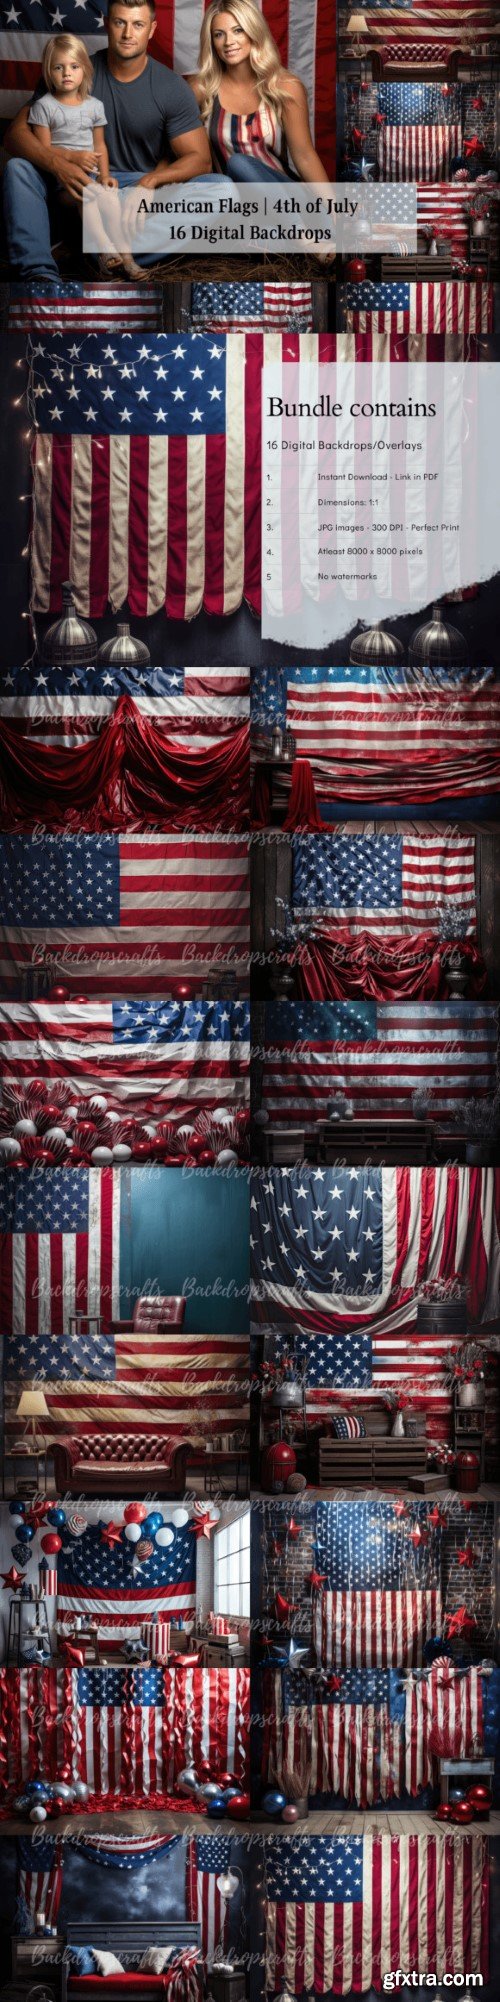 Independence Day | Digital Backdrops